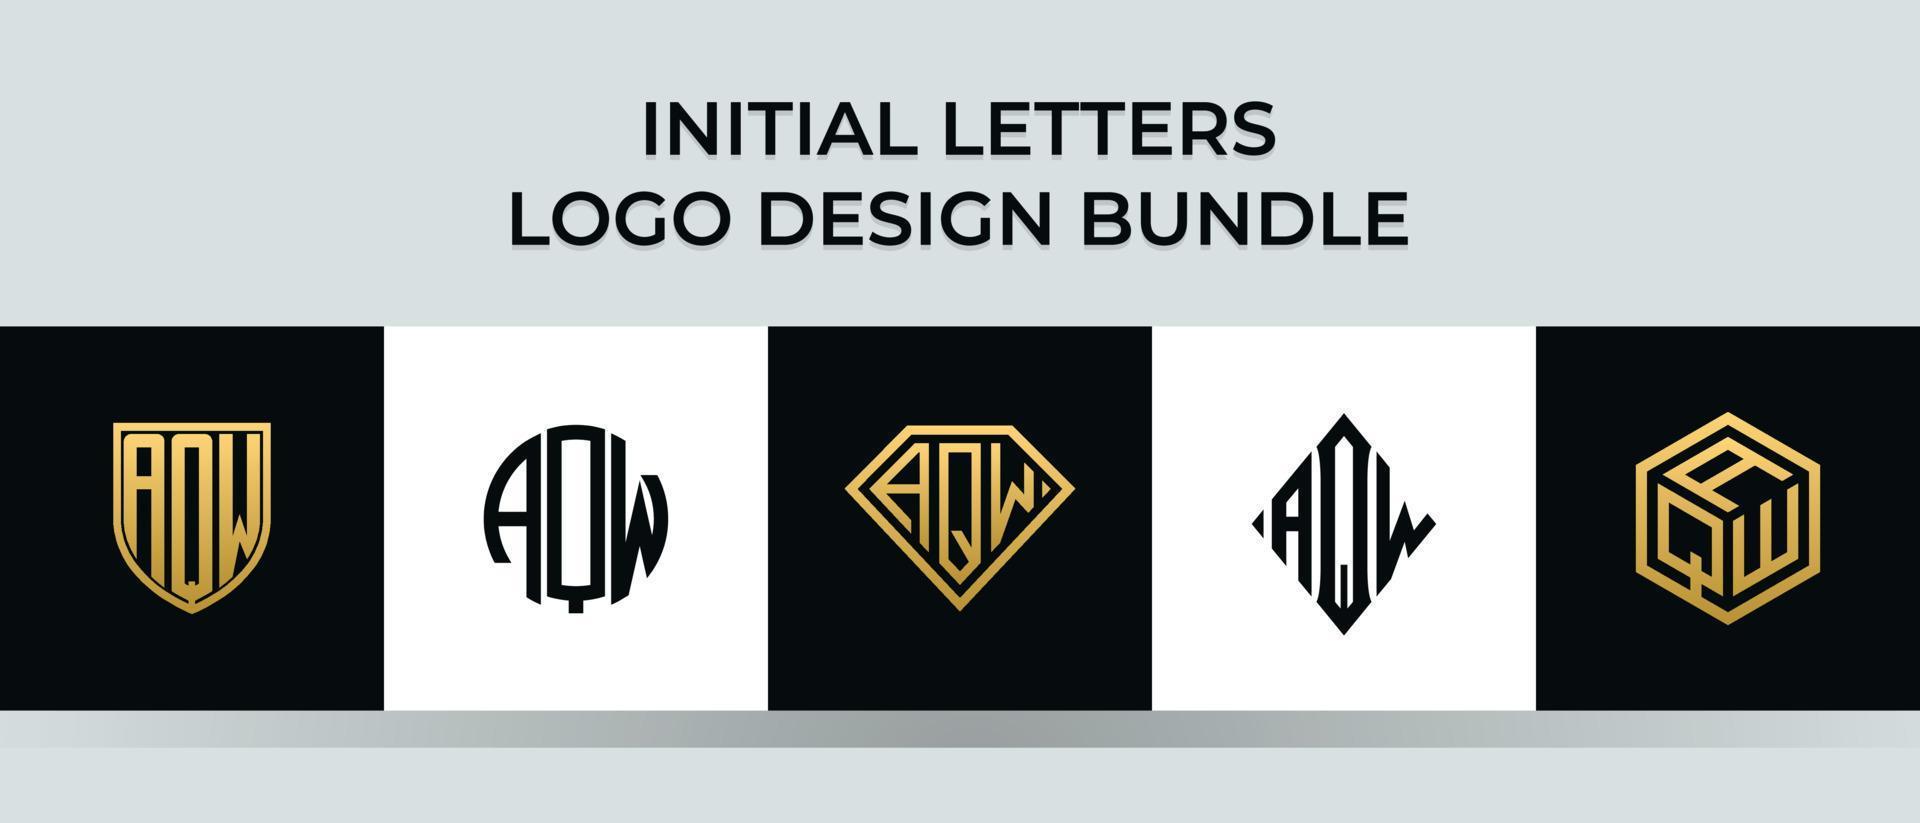 lettere iniziali aqw logo design bundle vettore